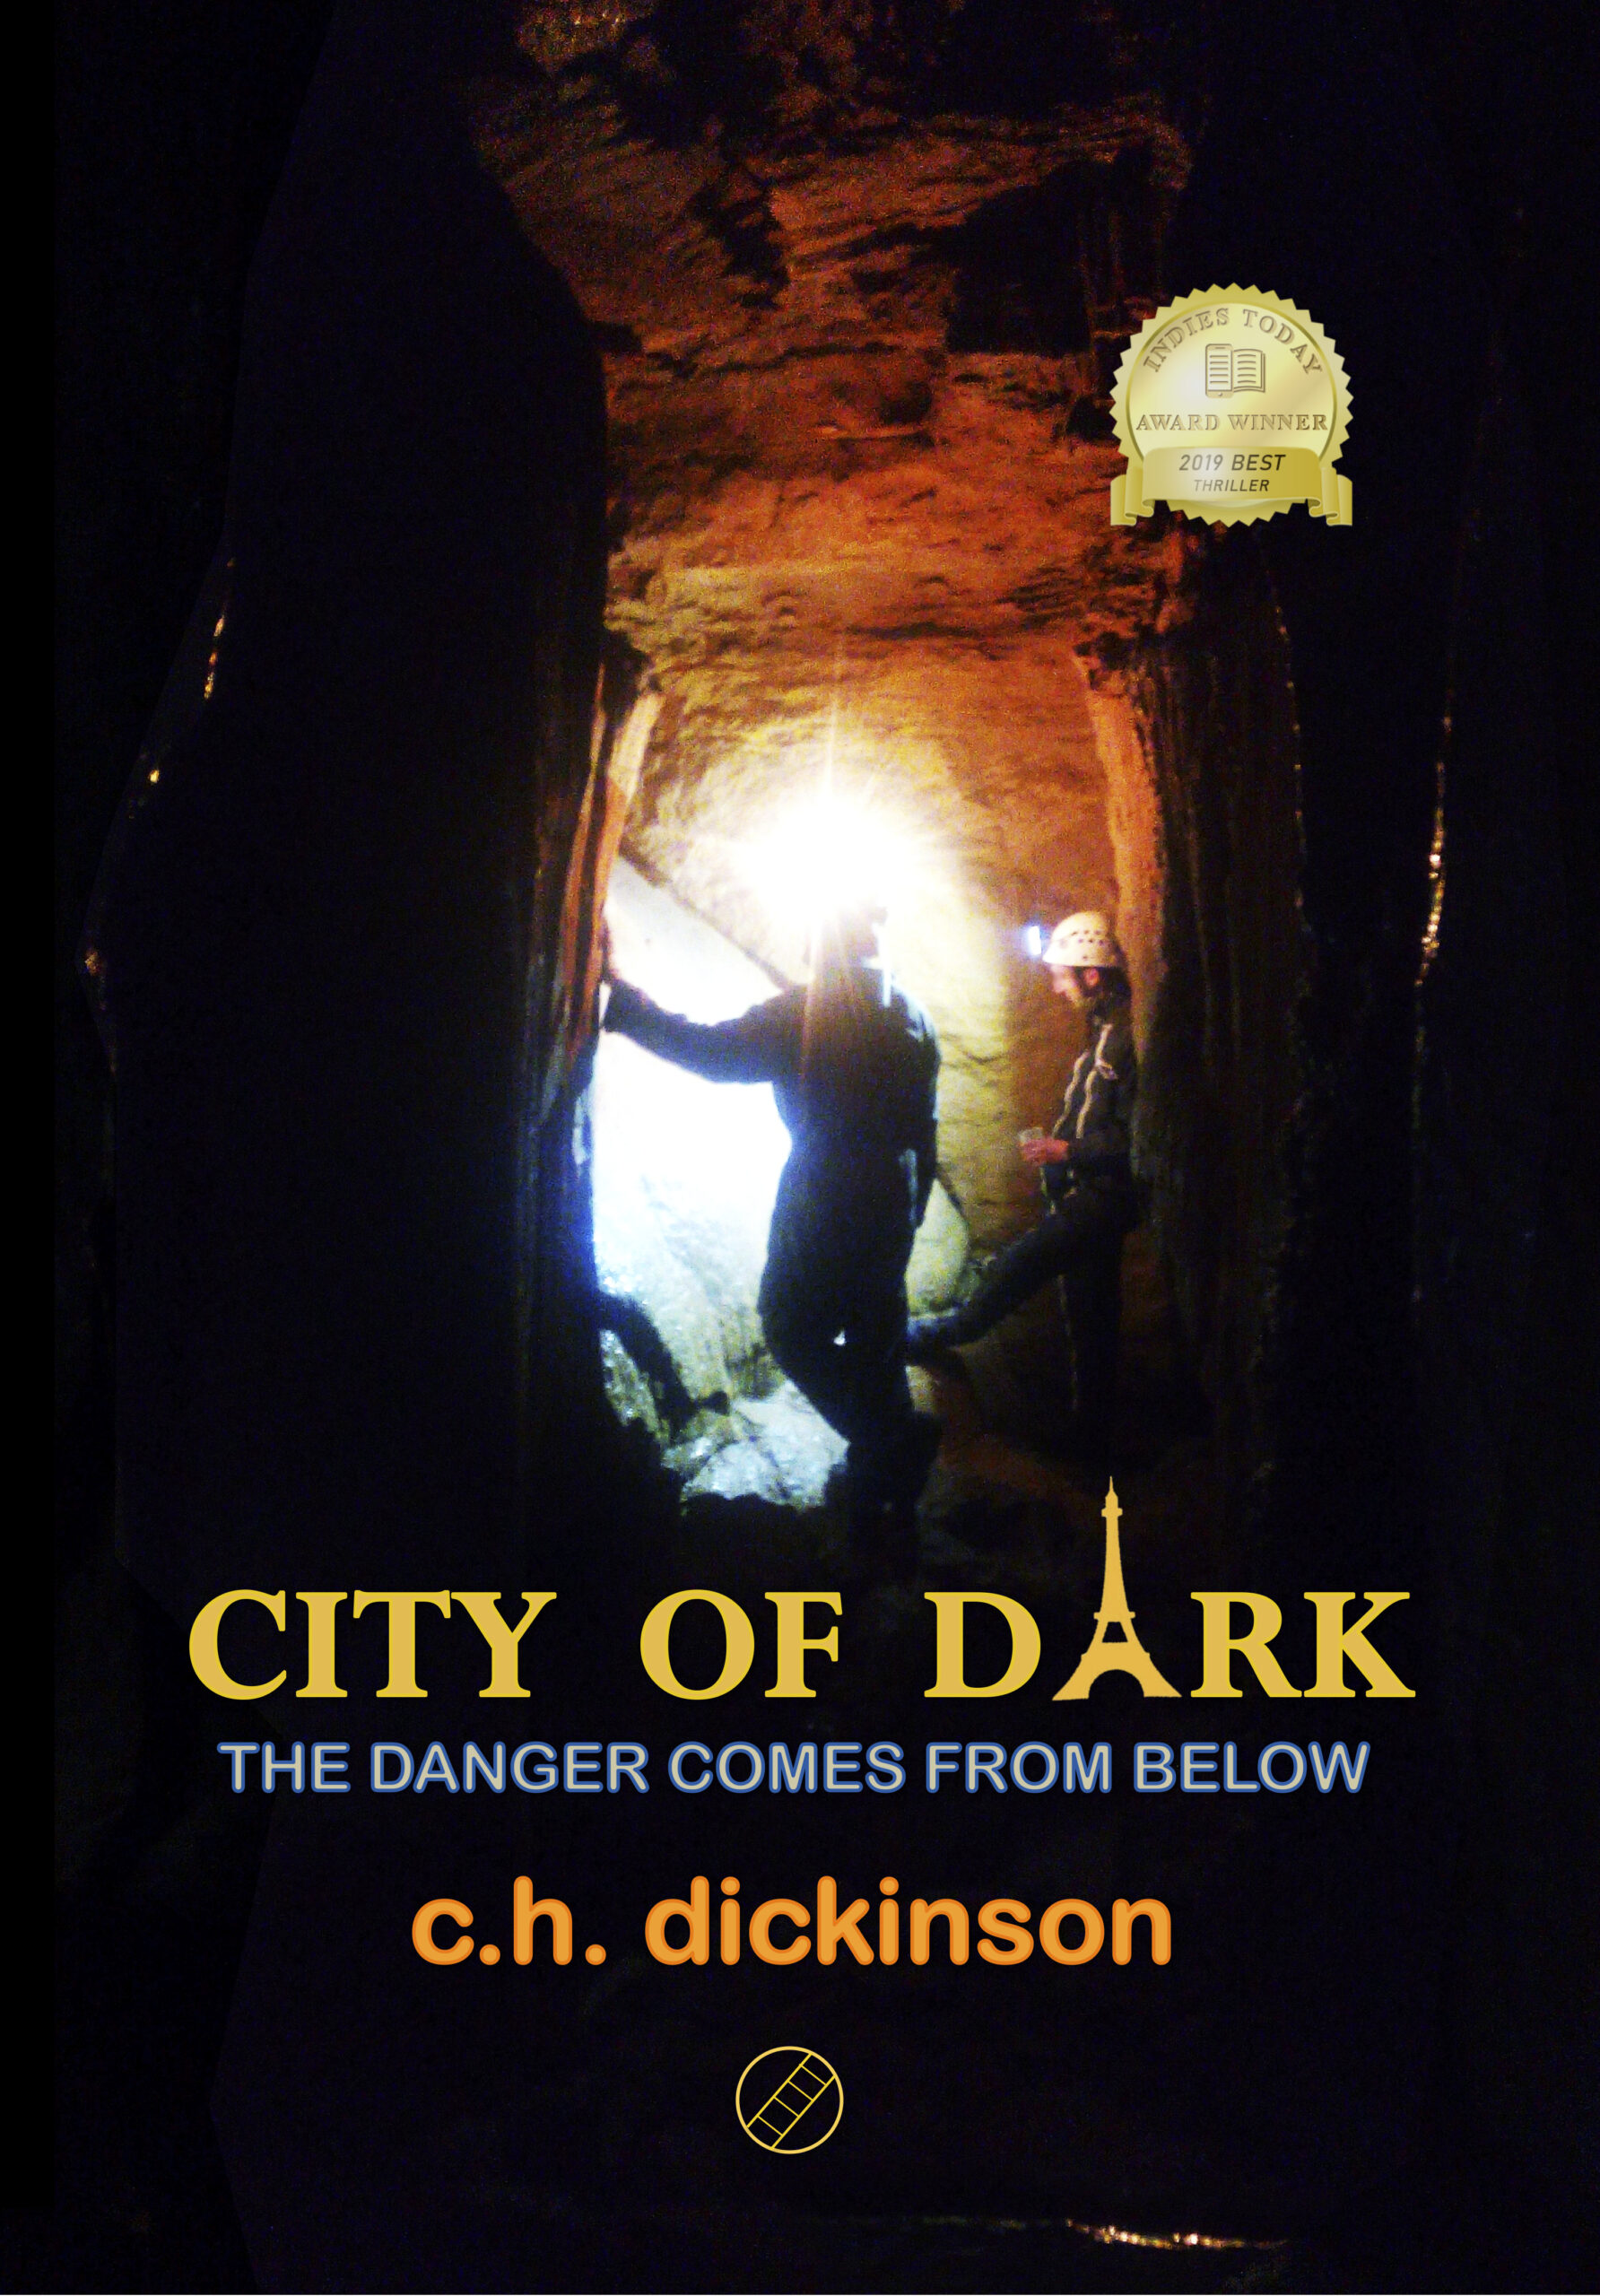 FREE: City of Dark by C.H. Dickinson